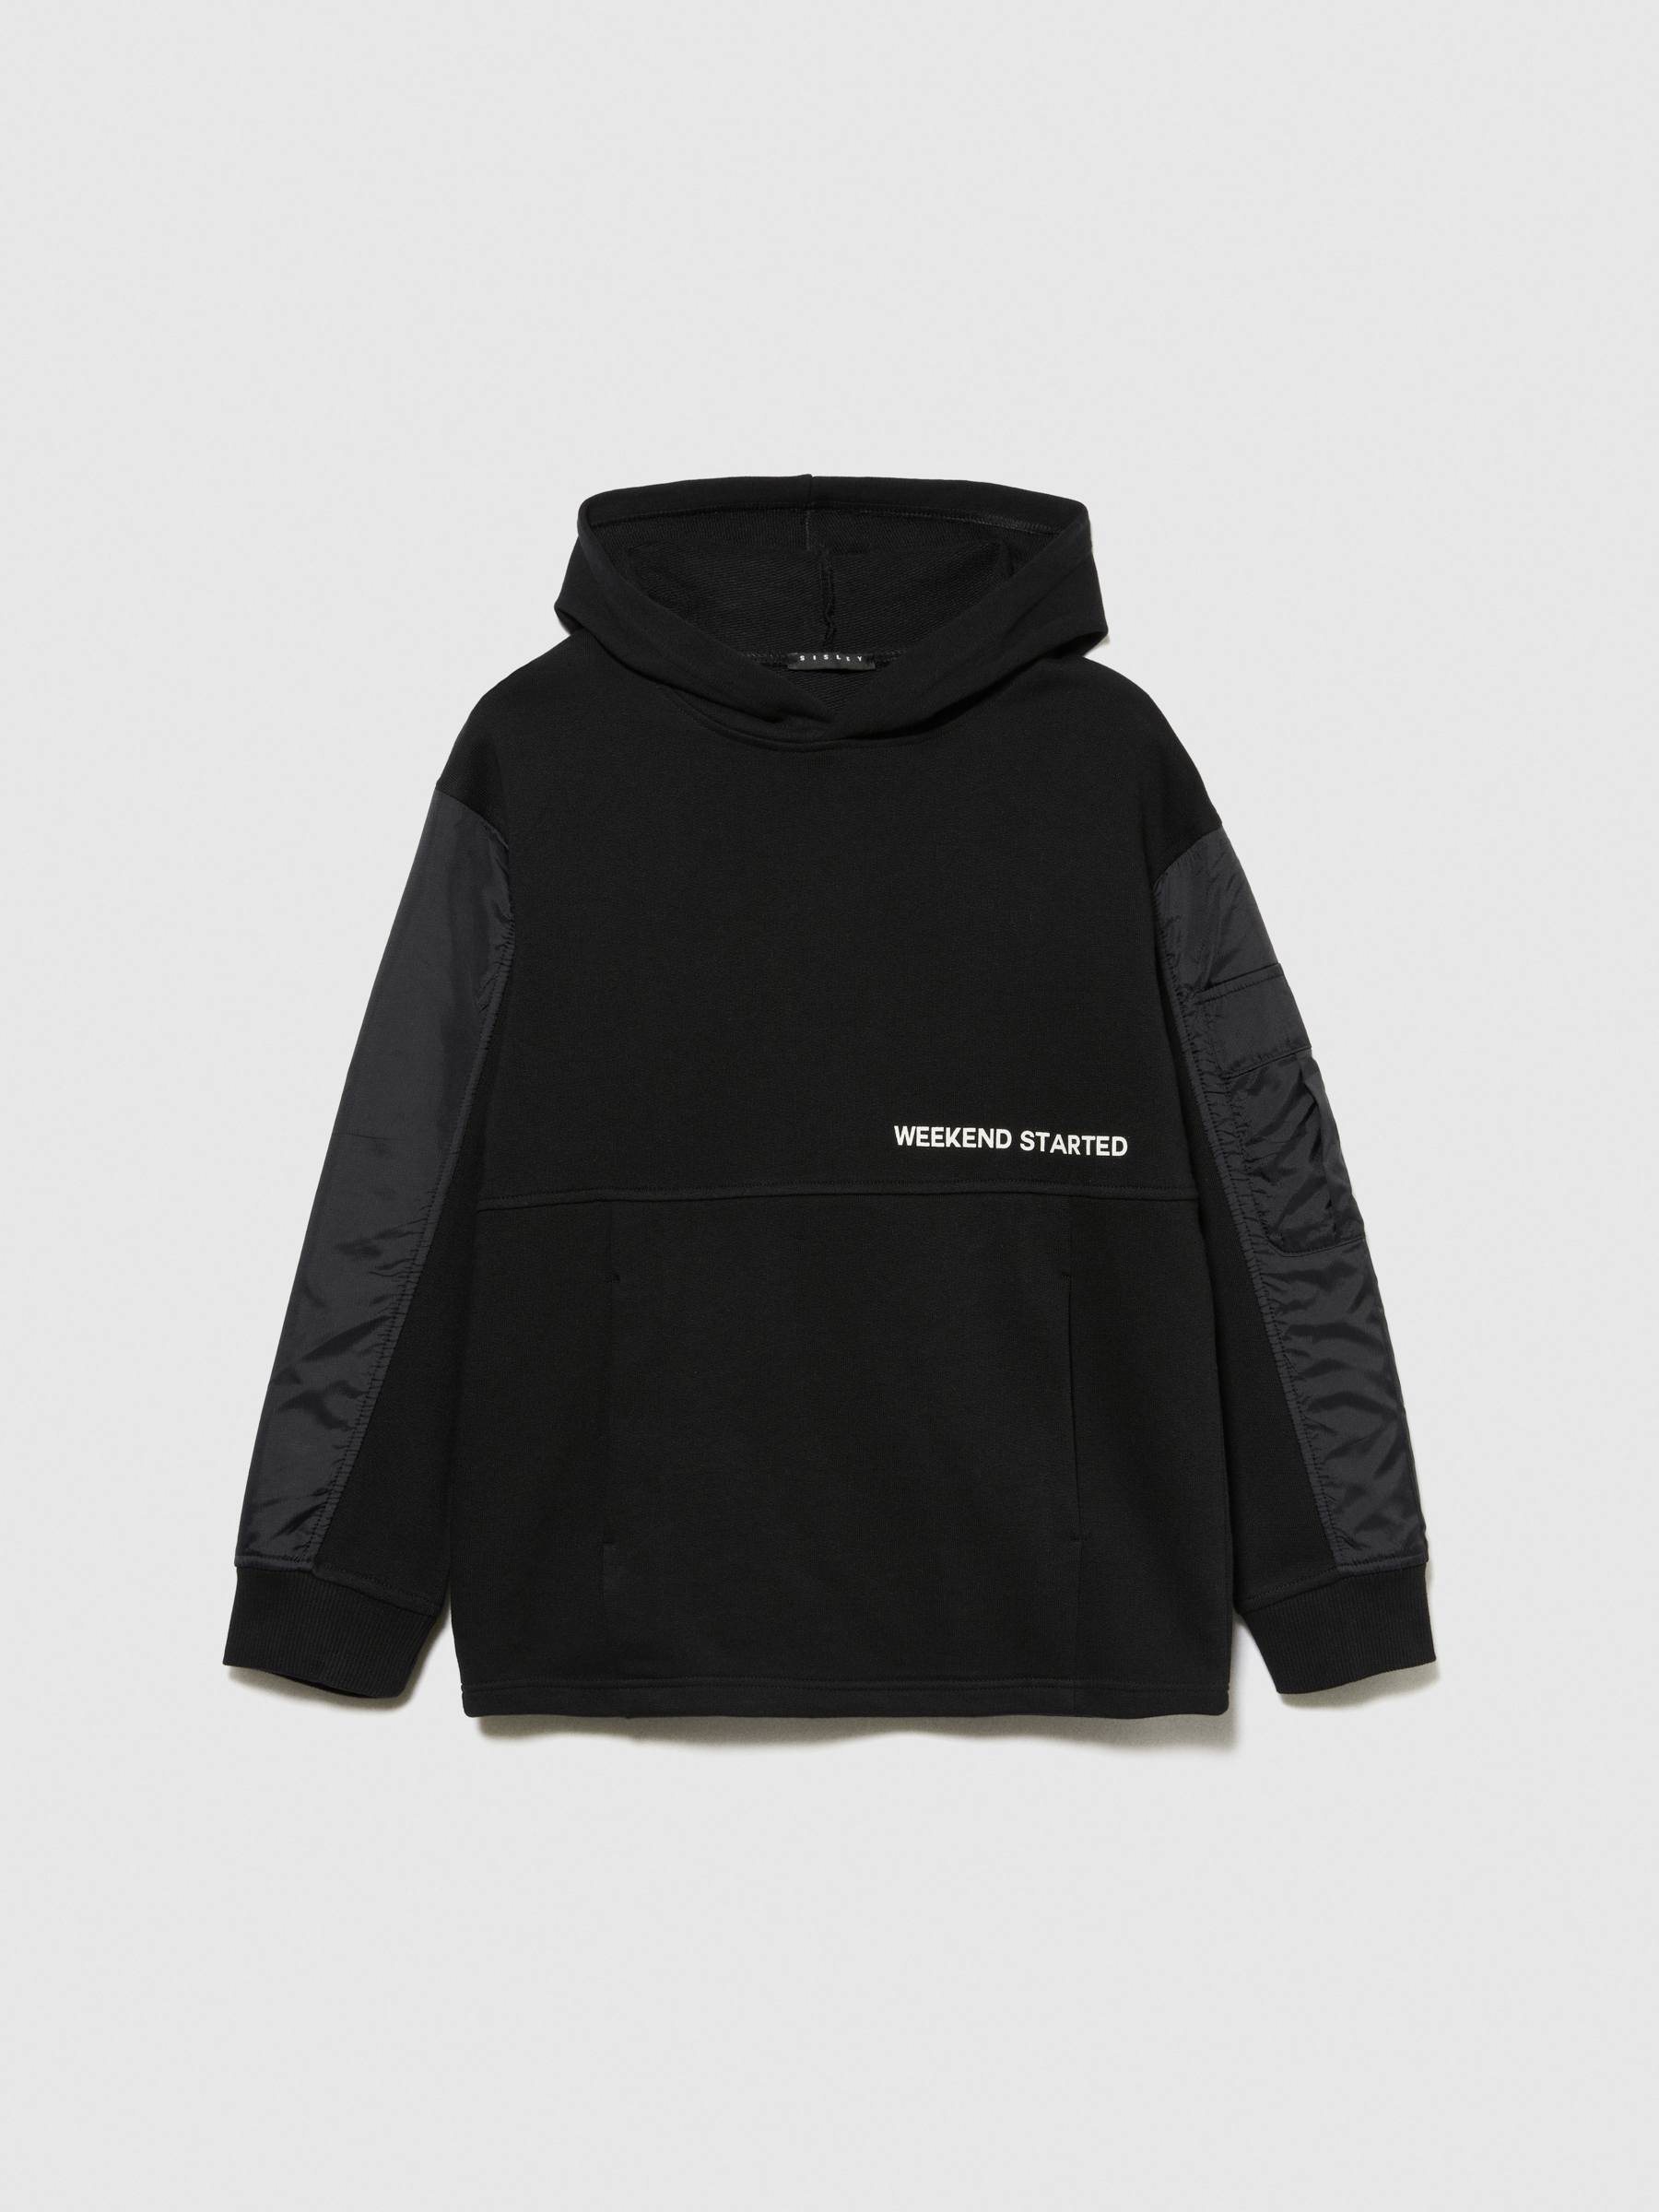 Sisley Young - Mixed Material Sweatshirt With Maxi Print, Man, Black, Size: S